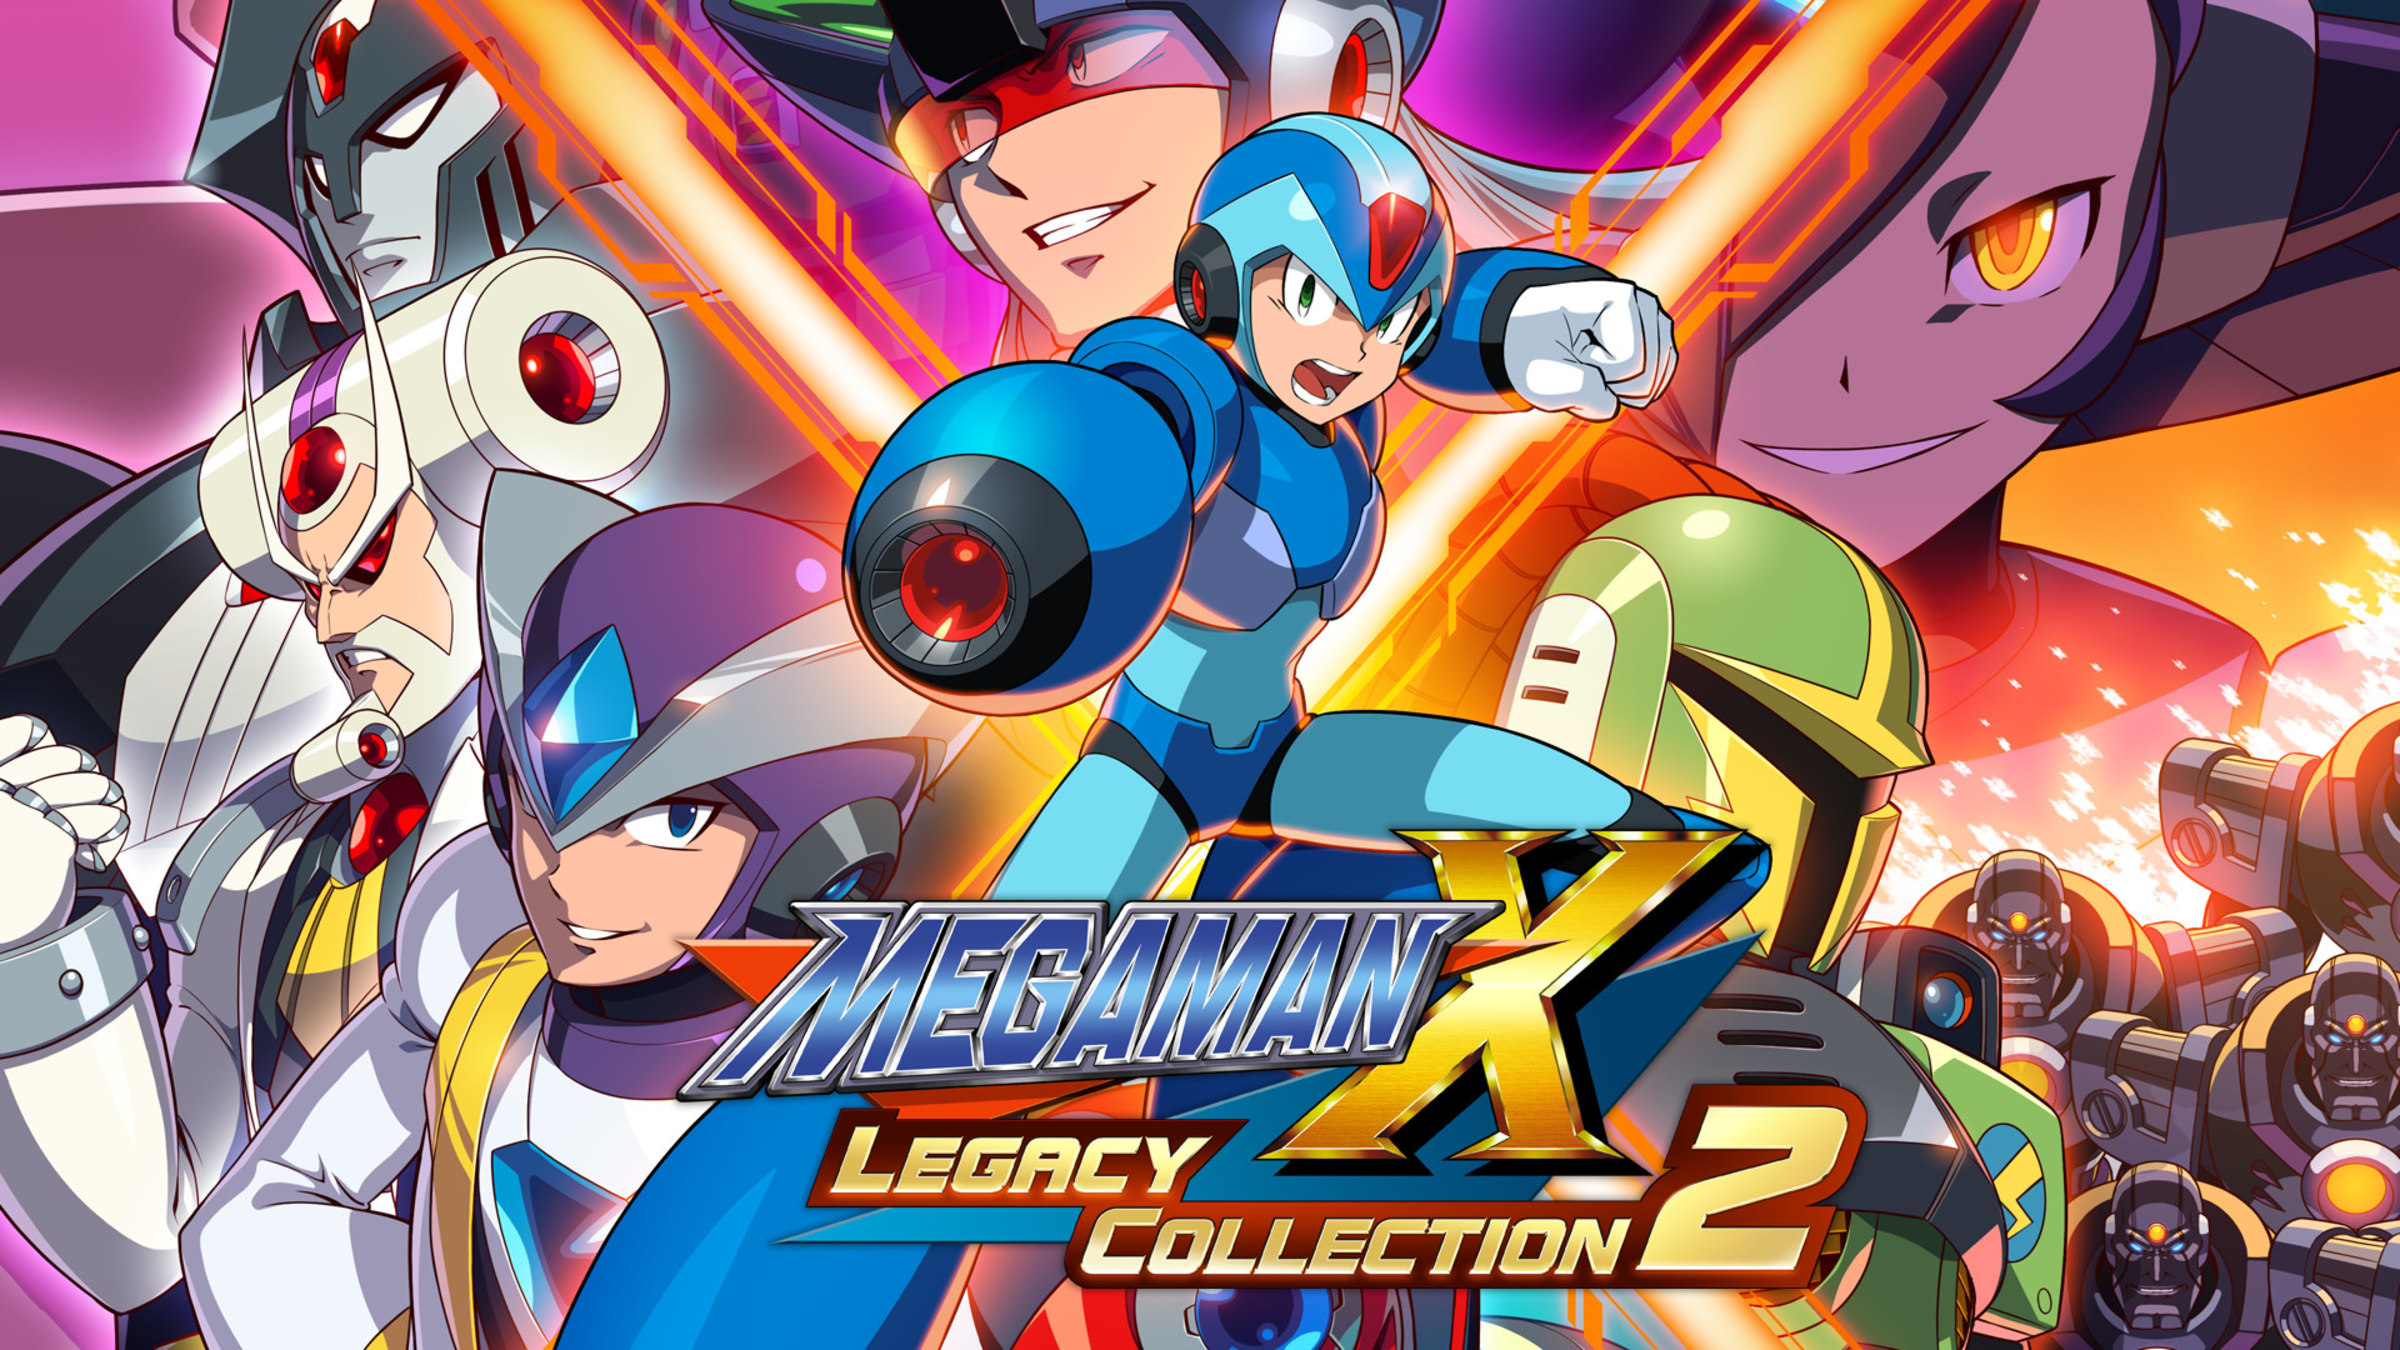 Megaman collection. Mega man x6. Mega man x Legacy collection. Megaman x Nintendo Switch. Megaman Legacy collection.